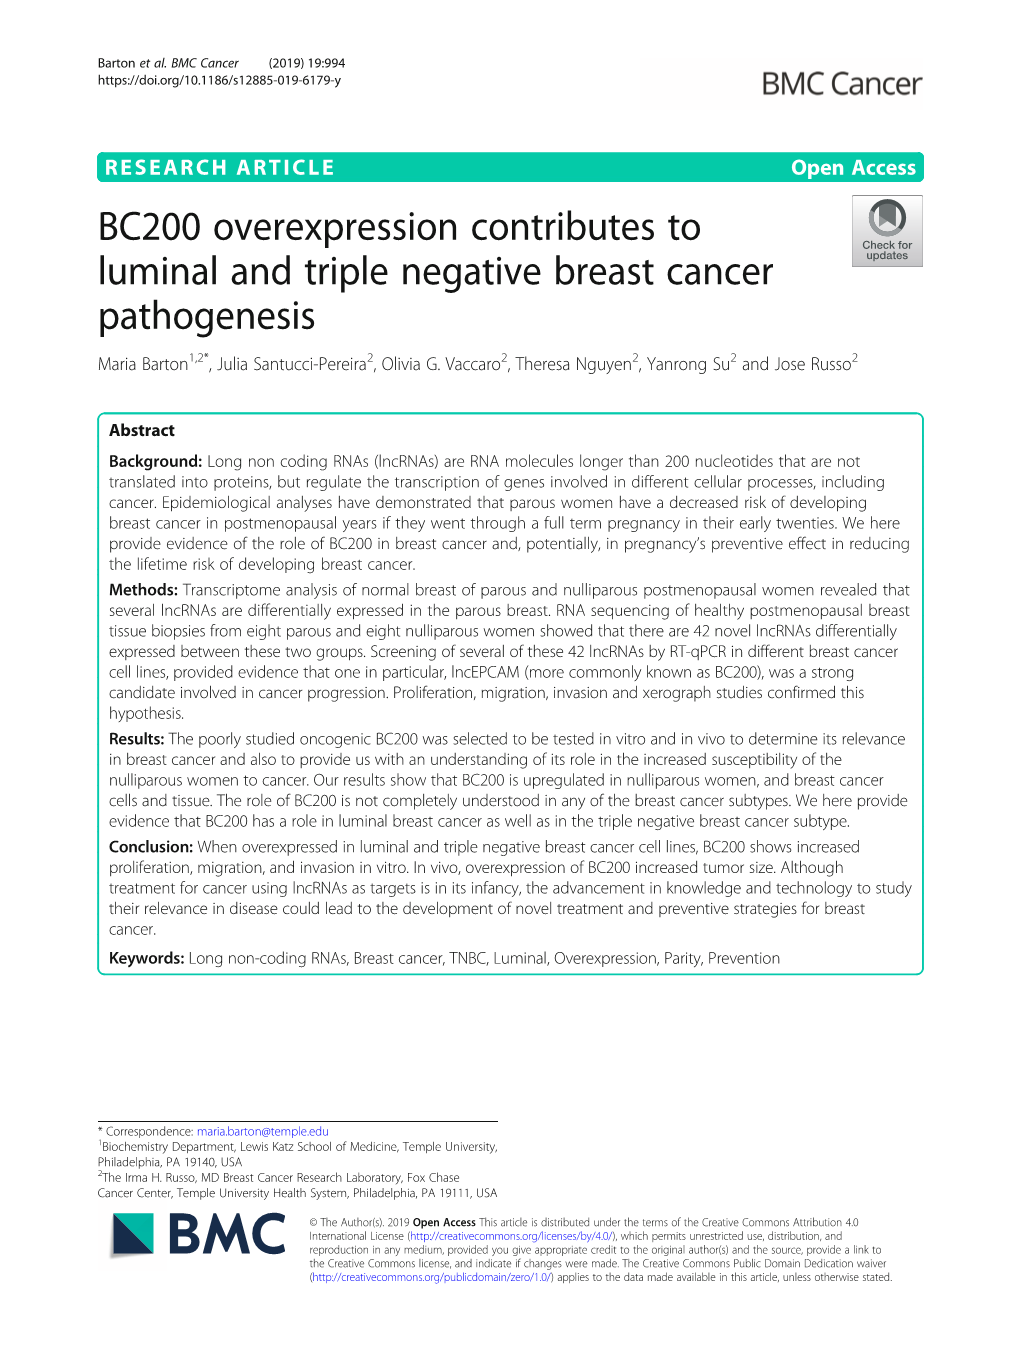 BC200 Overexpression Contributes to Luminal and Triple Negative Breast Cancer Pathogenesis Maria Barton1,2*, Julia Santucci-Pereira2, Olivia G